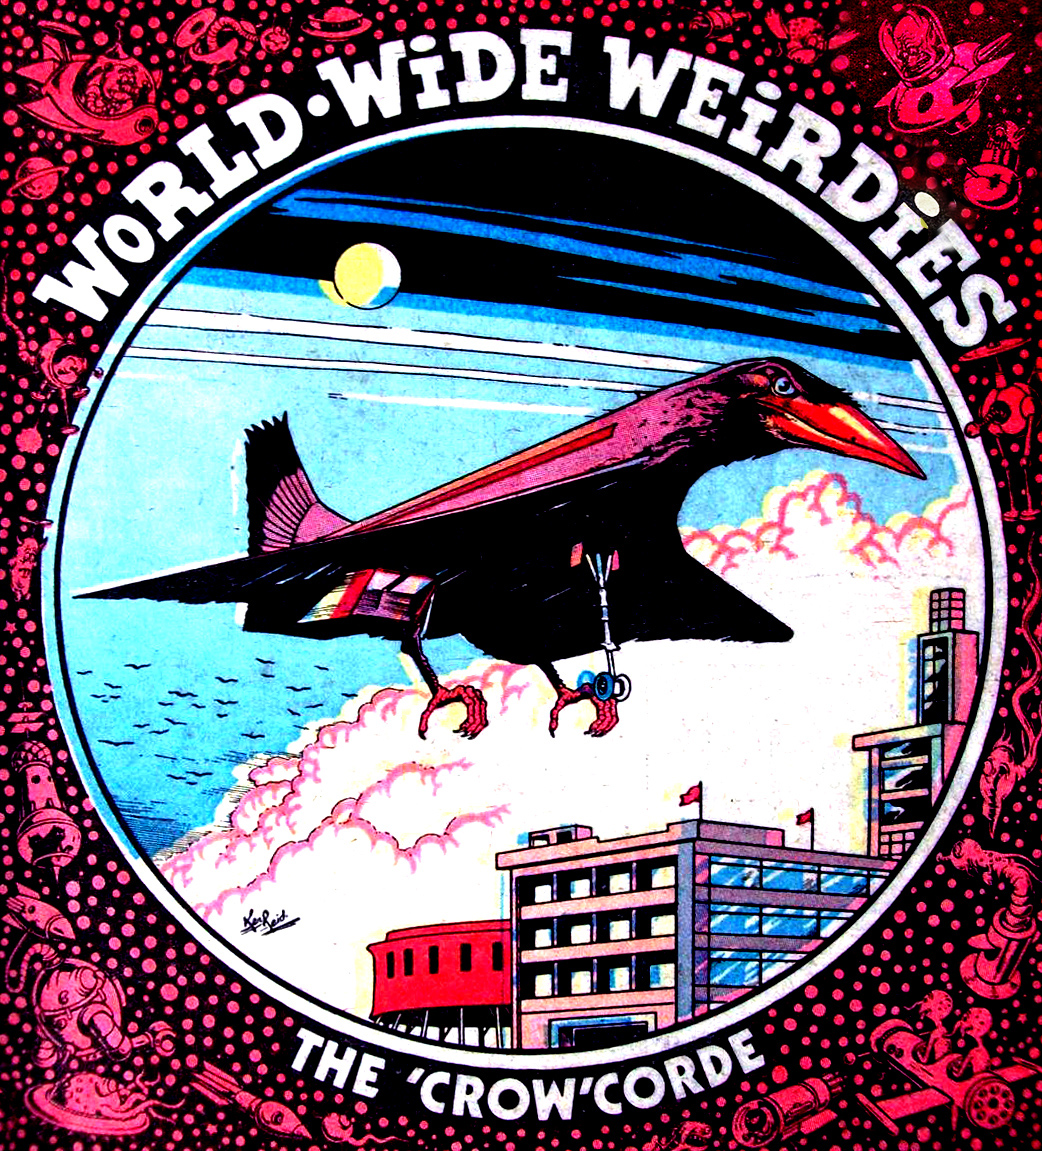 Ken Reid - World Wide Weirdies 09